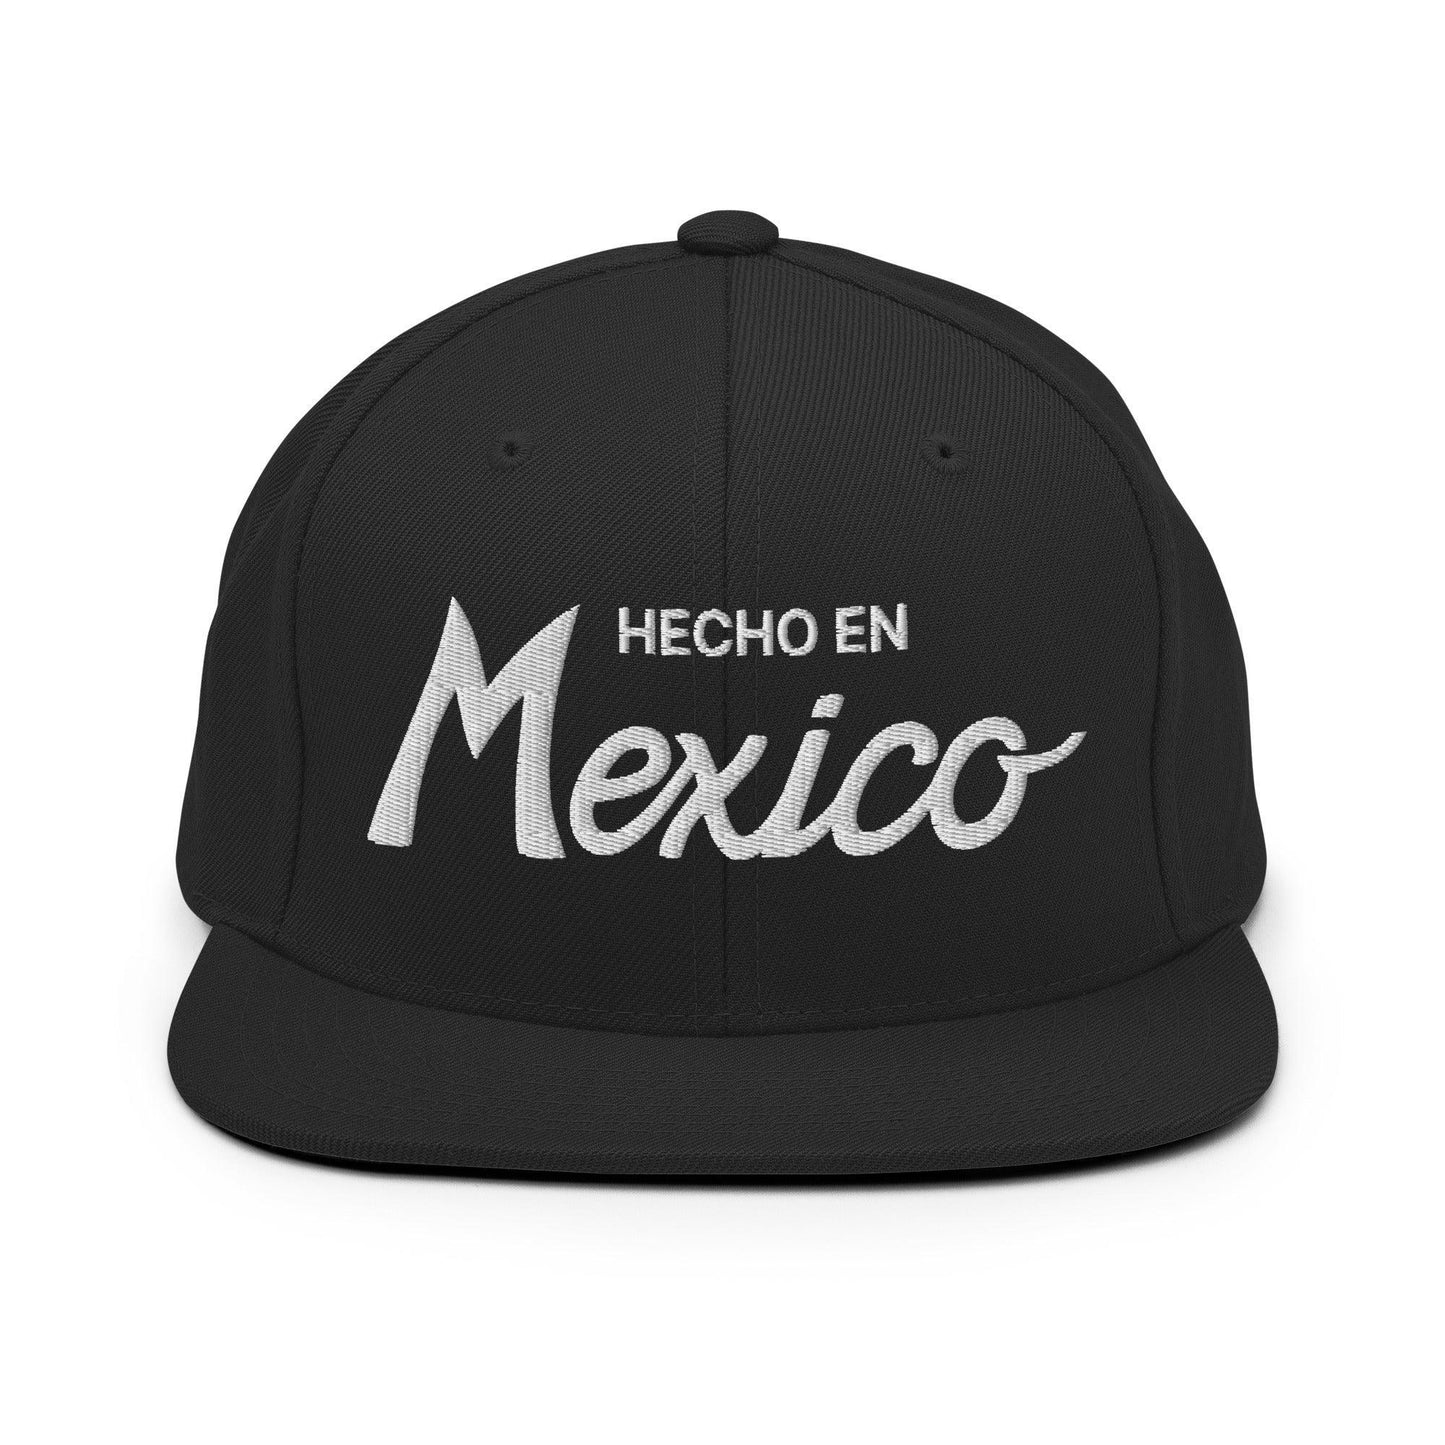 Hecho en Mexico V Script Snapback Hat Black